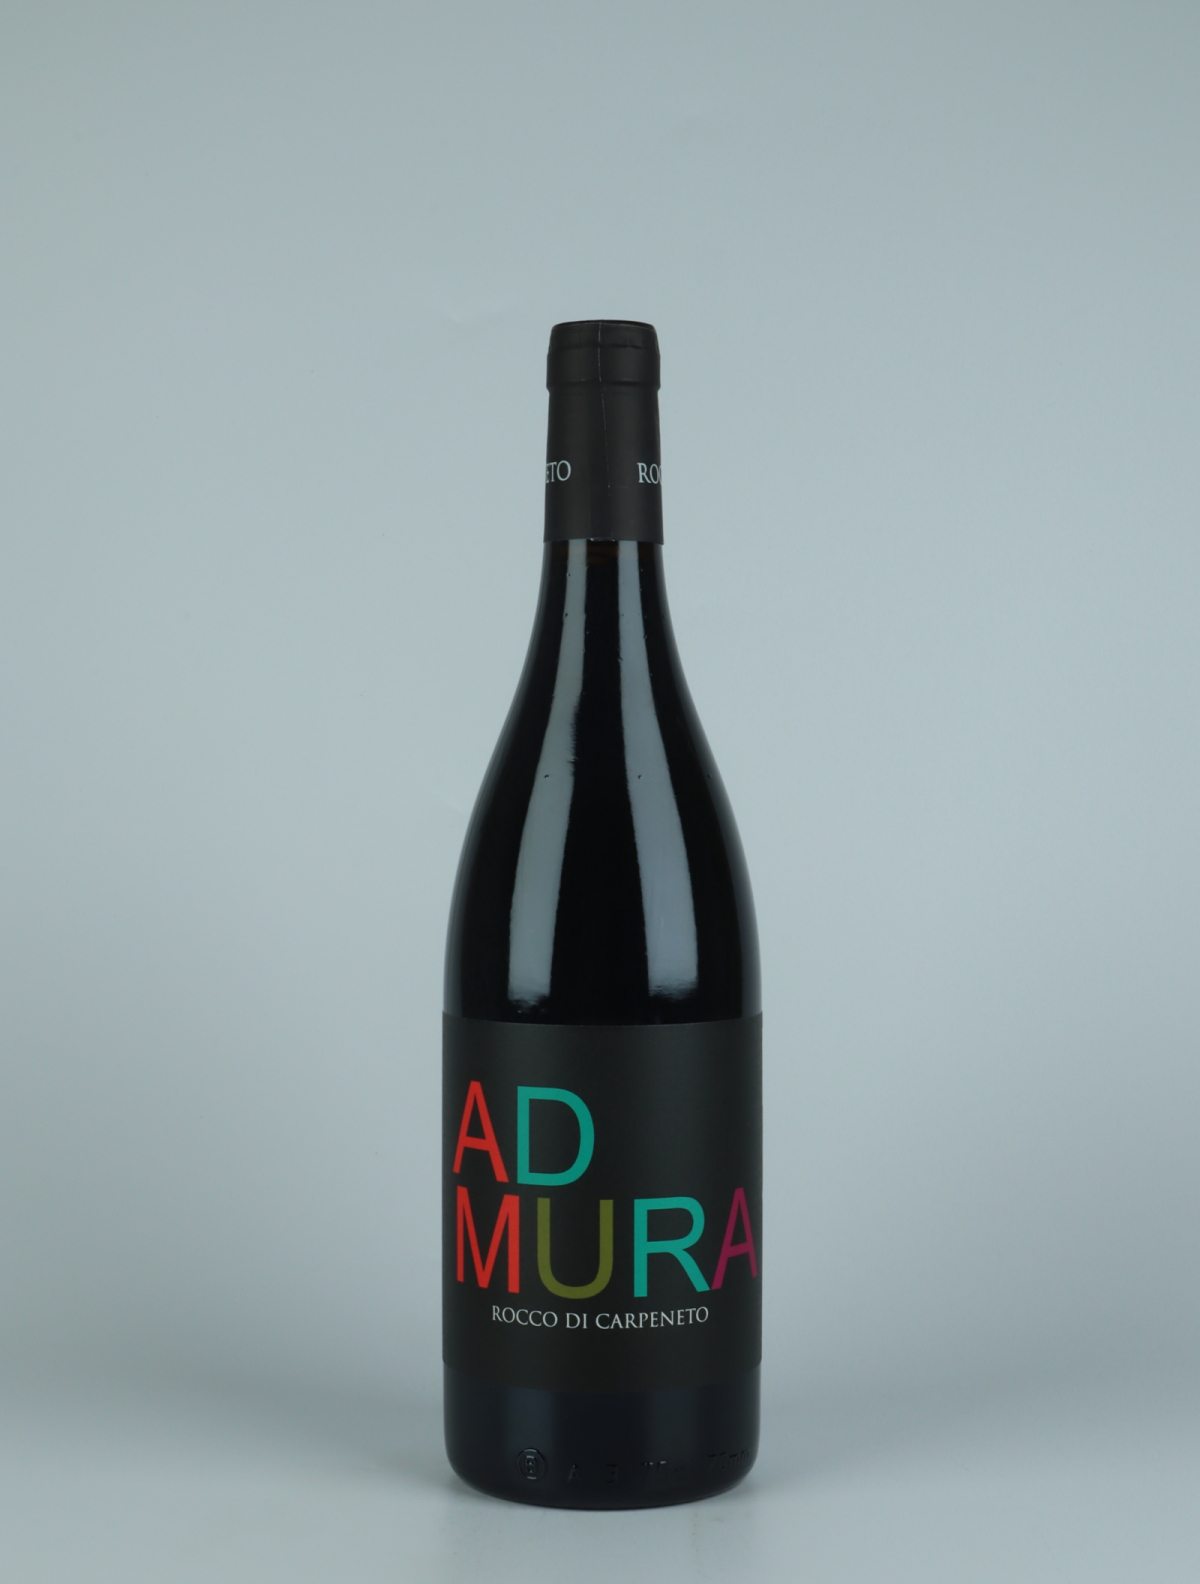 En flaske 2019 Admura Rødvin fra Rocco di Carpeneto, Piemonte i Italien